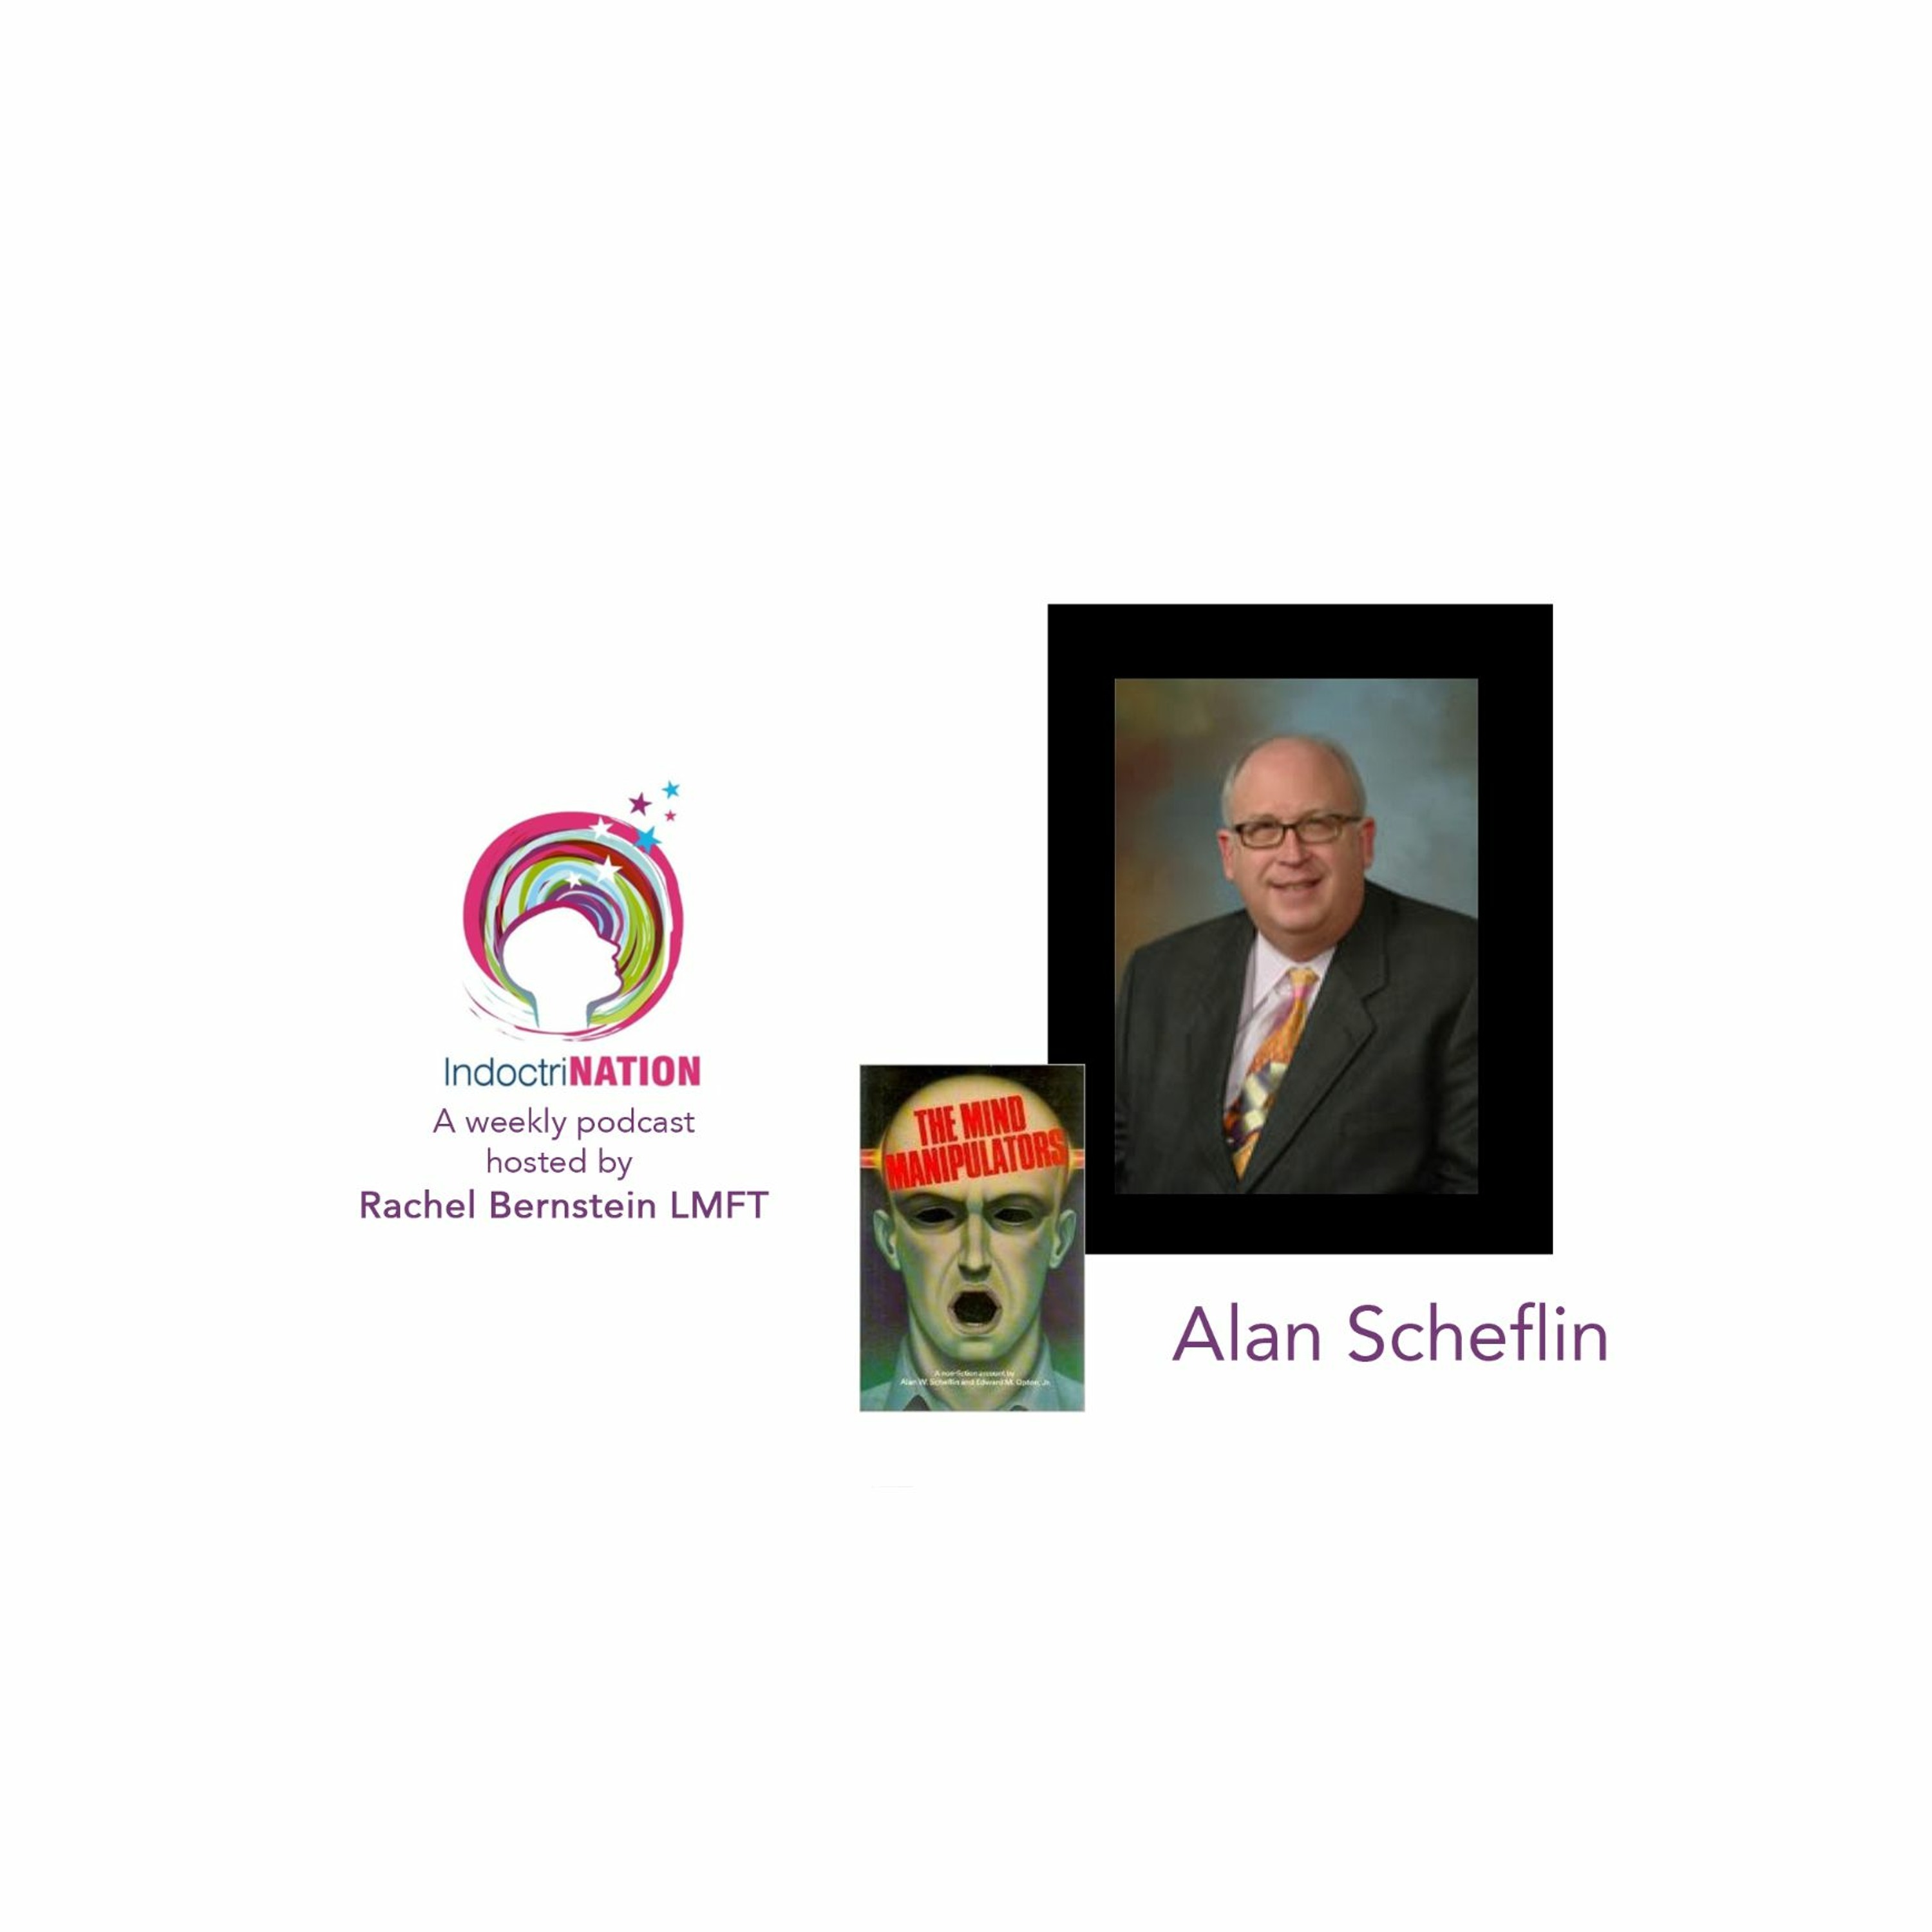 Mind Control, Hypnosis, & Undue Influence w/ Professor Alan Scheflin, hypnosis expert - S2E8 Image